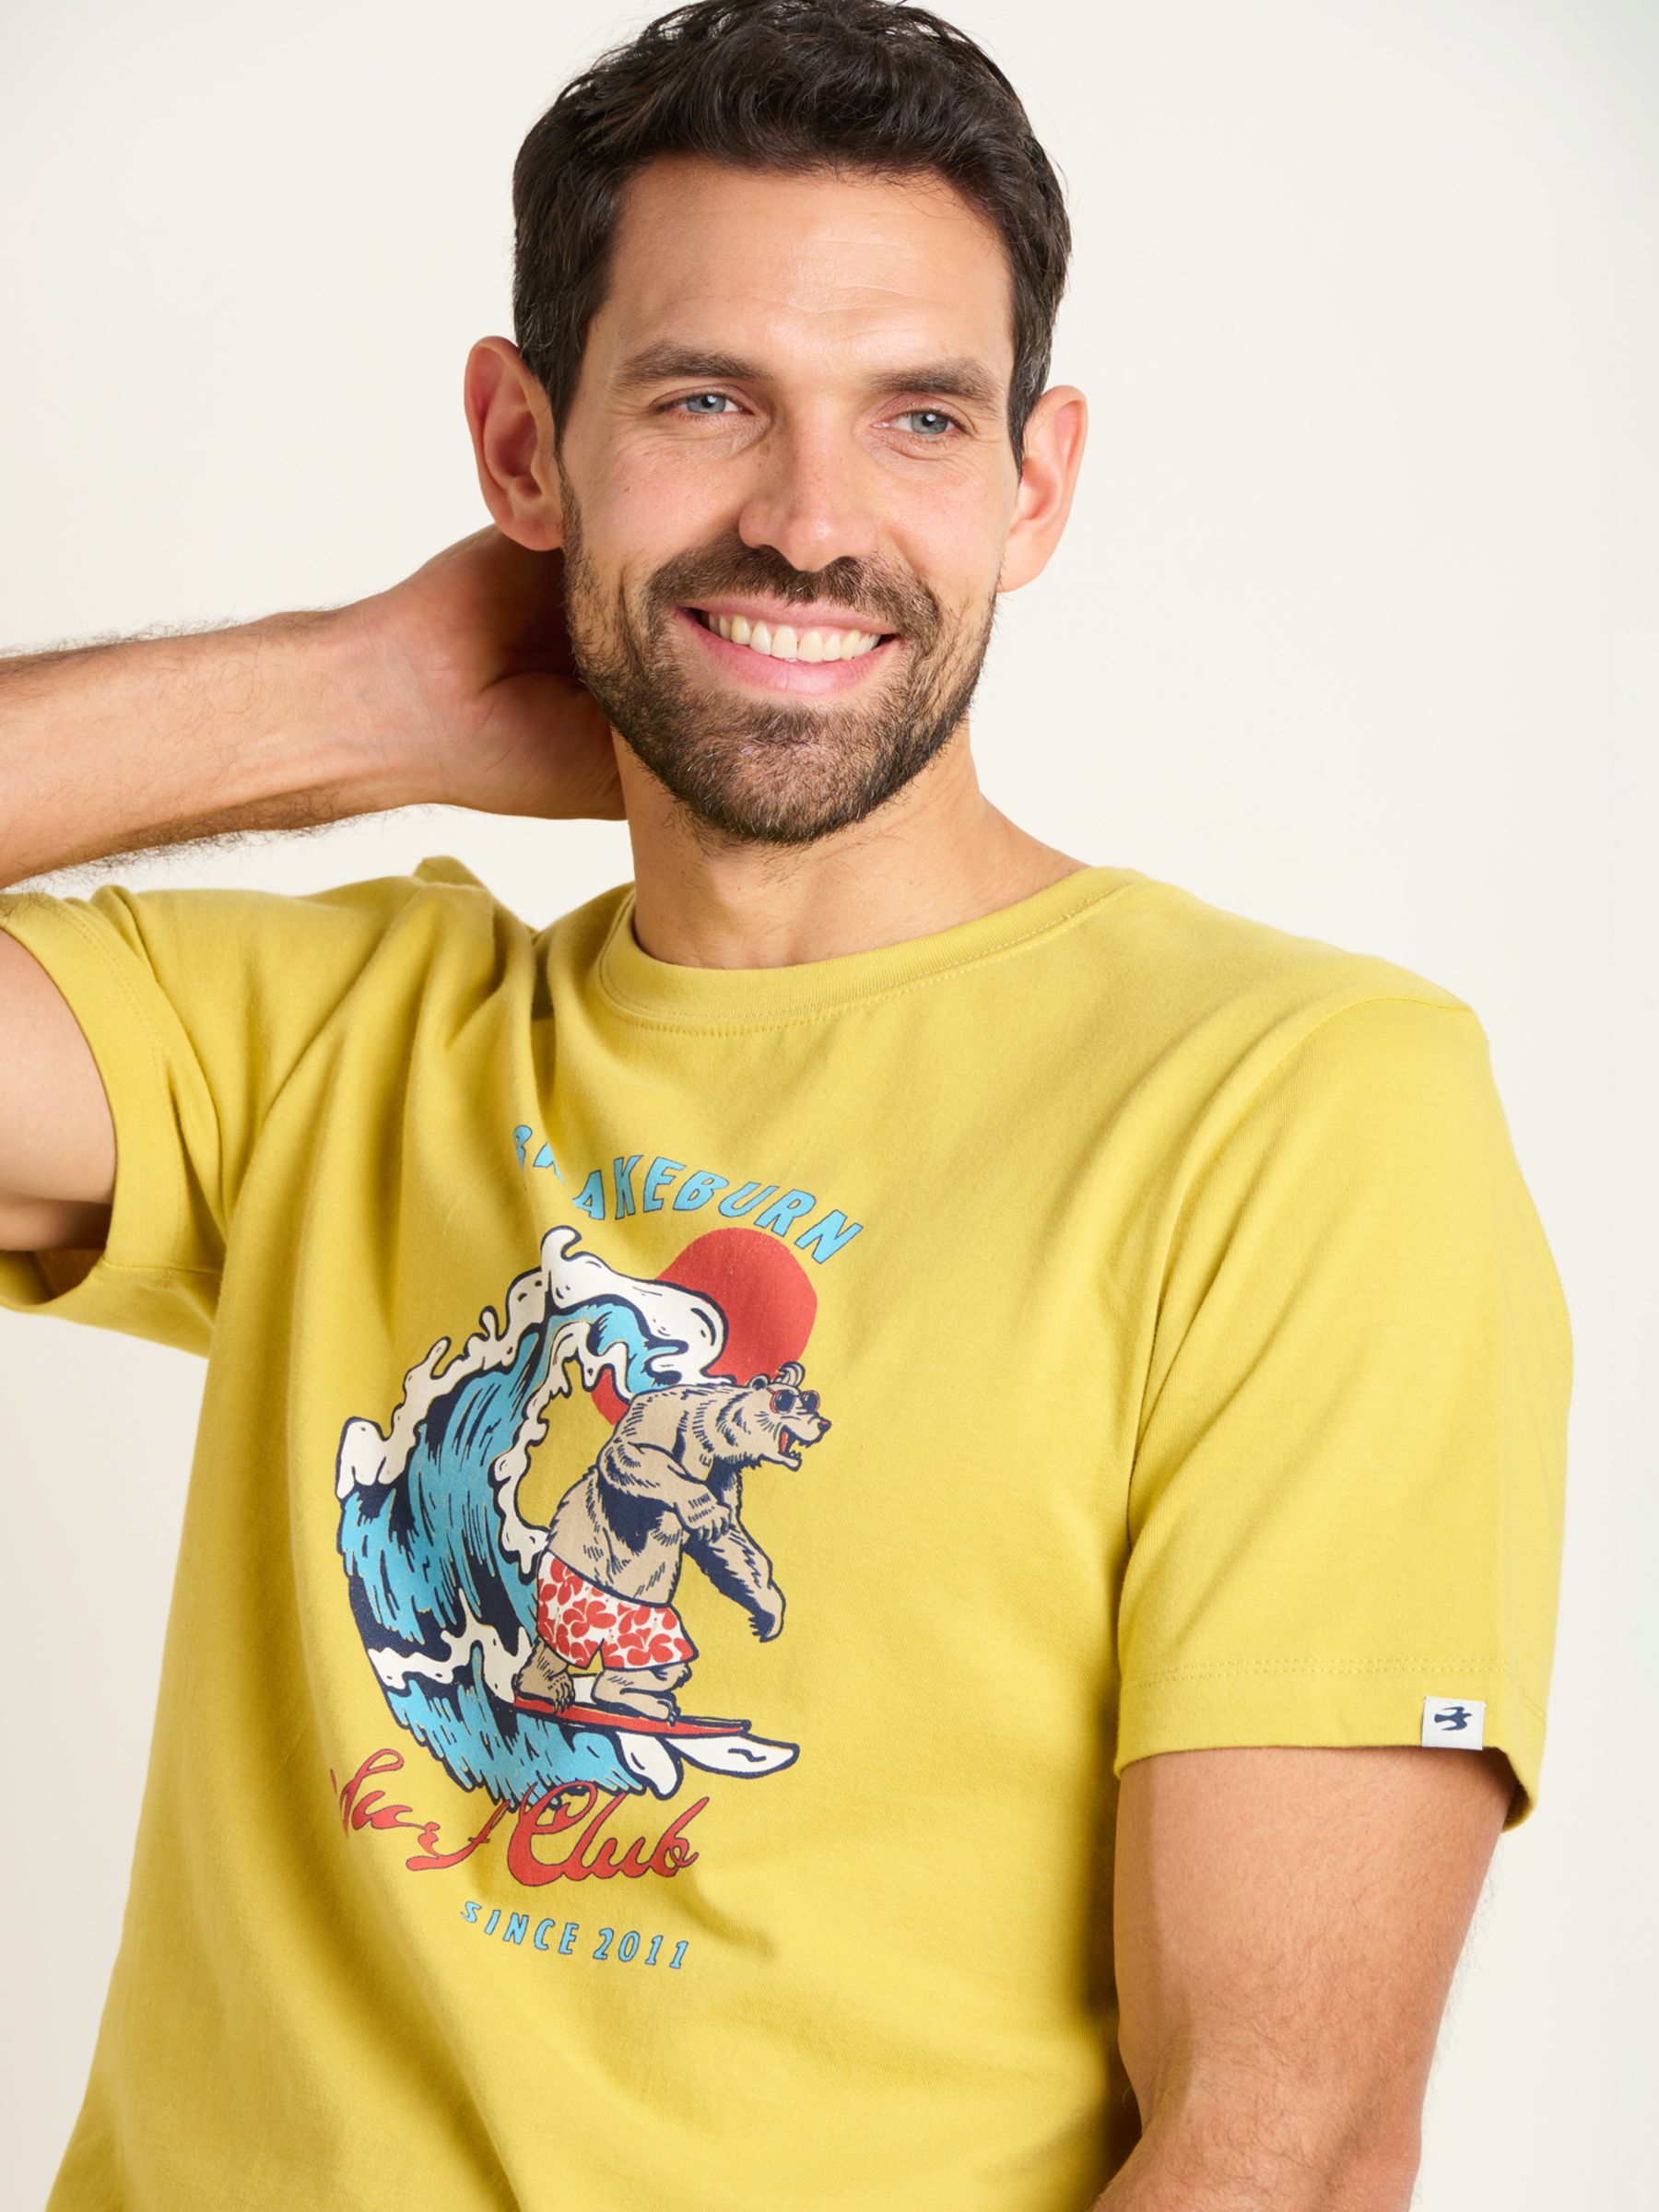 Brakeburn Bear Cotton T-Shirt, Yellow, S